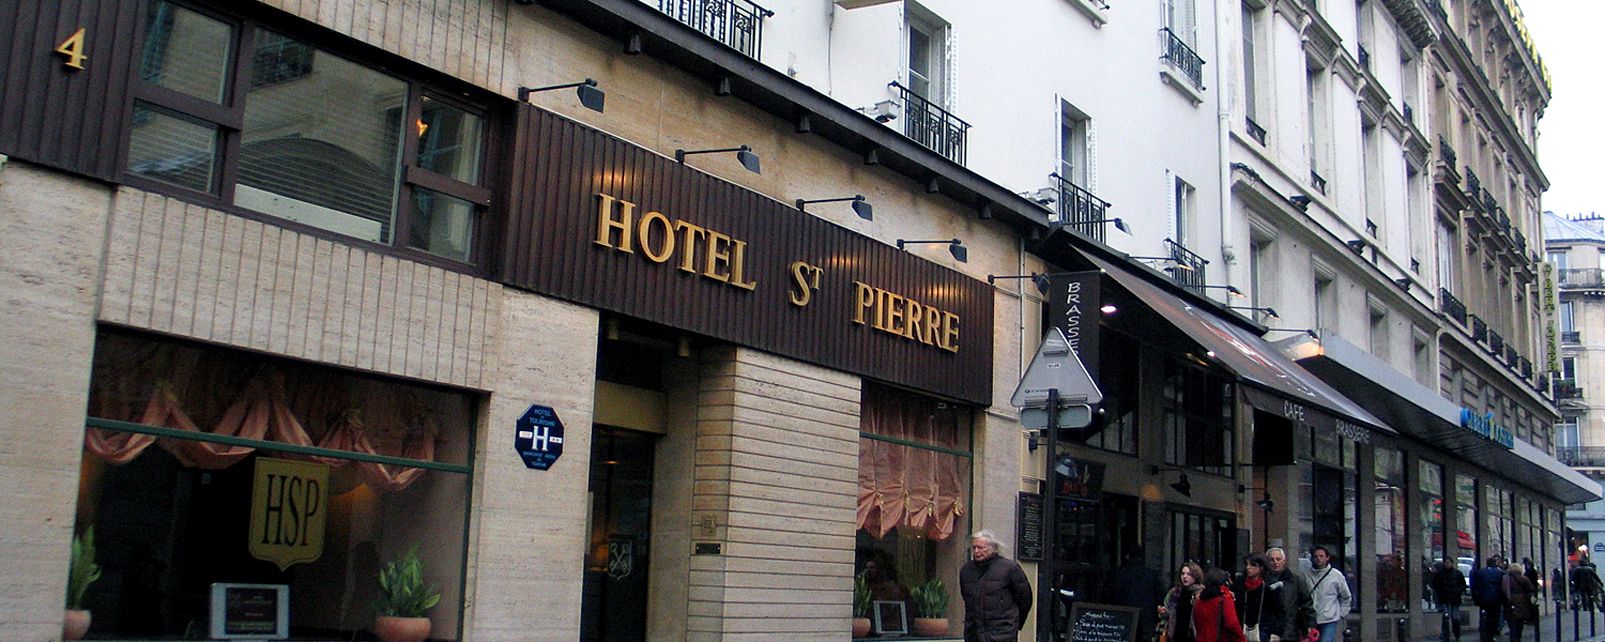 Hotel St Pierre